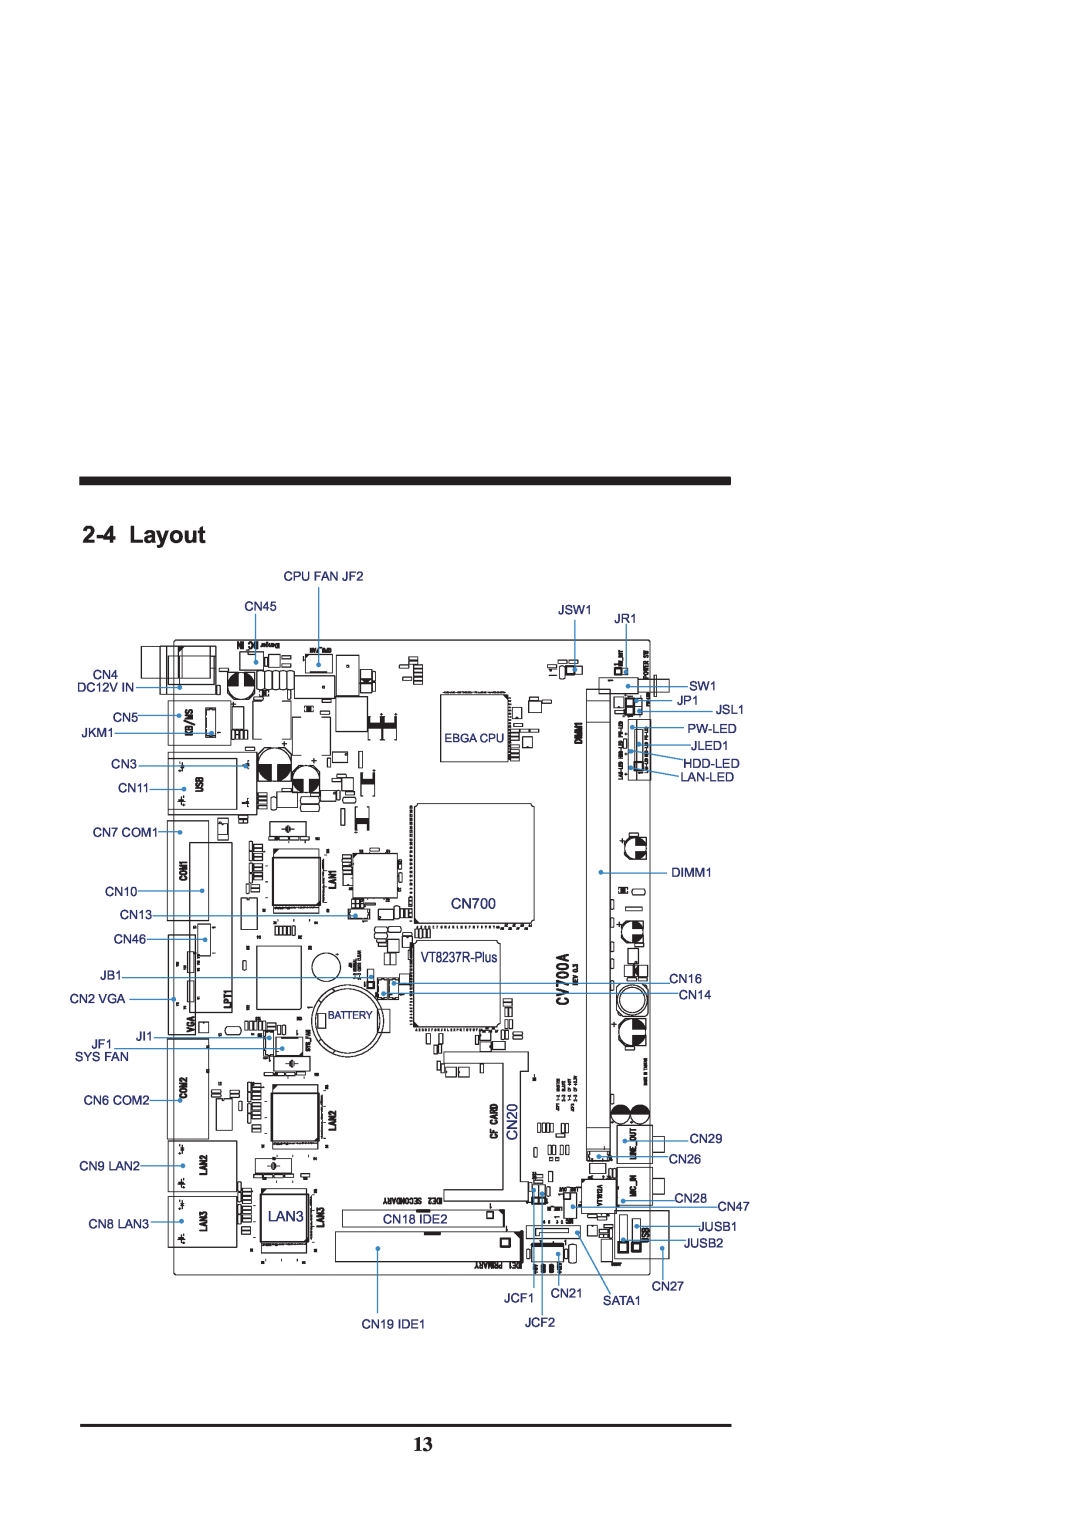 Intel CV702A, CV700A manual 2-4Layout, CN700 VT8237R-Plus, LAN3, CN20 